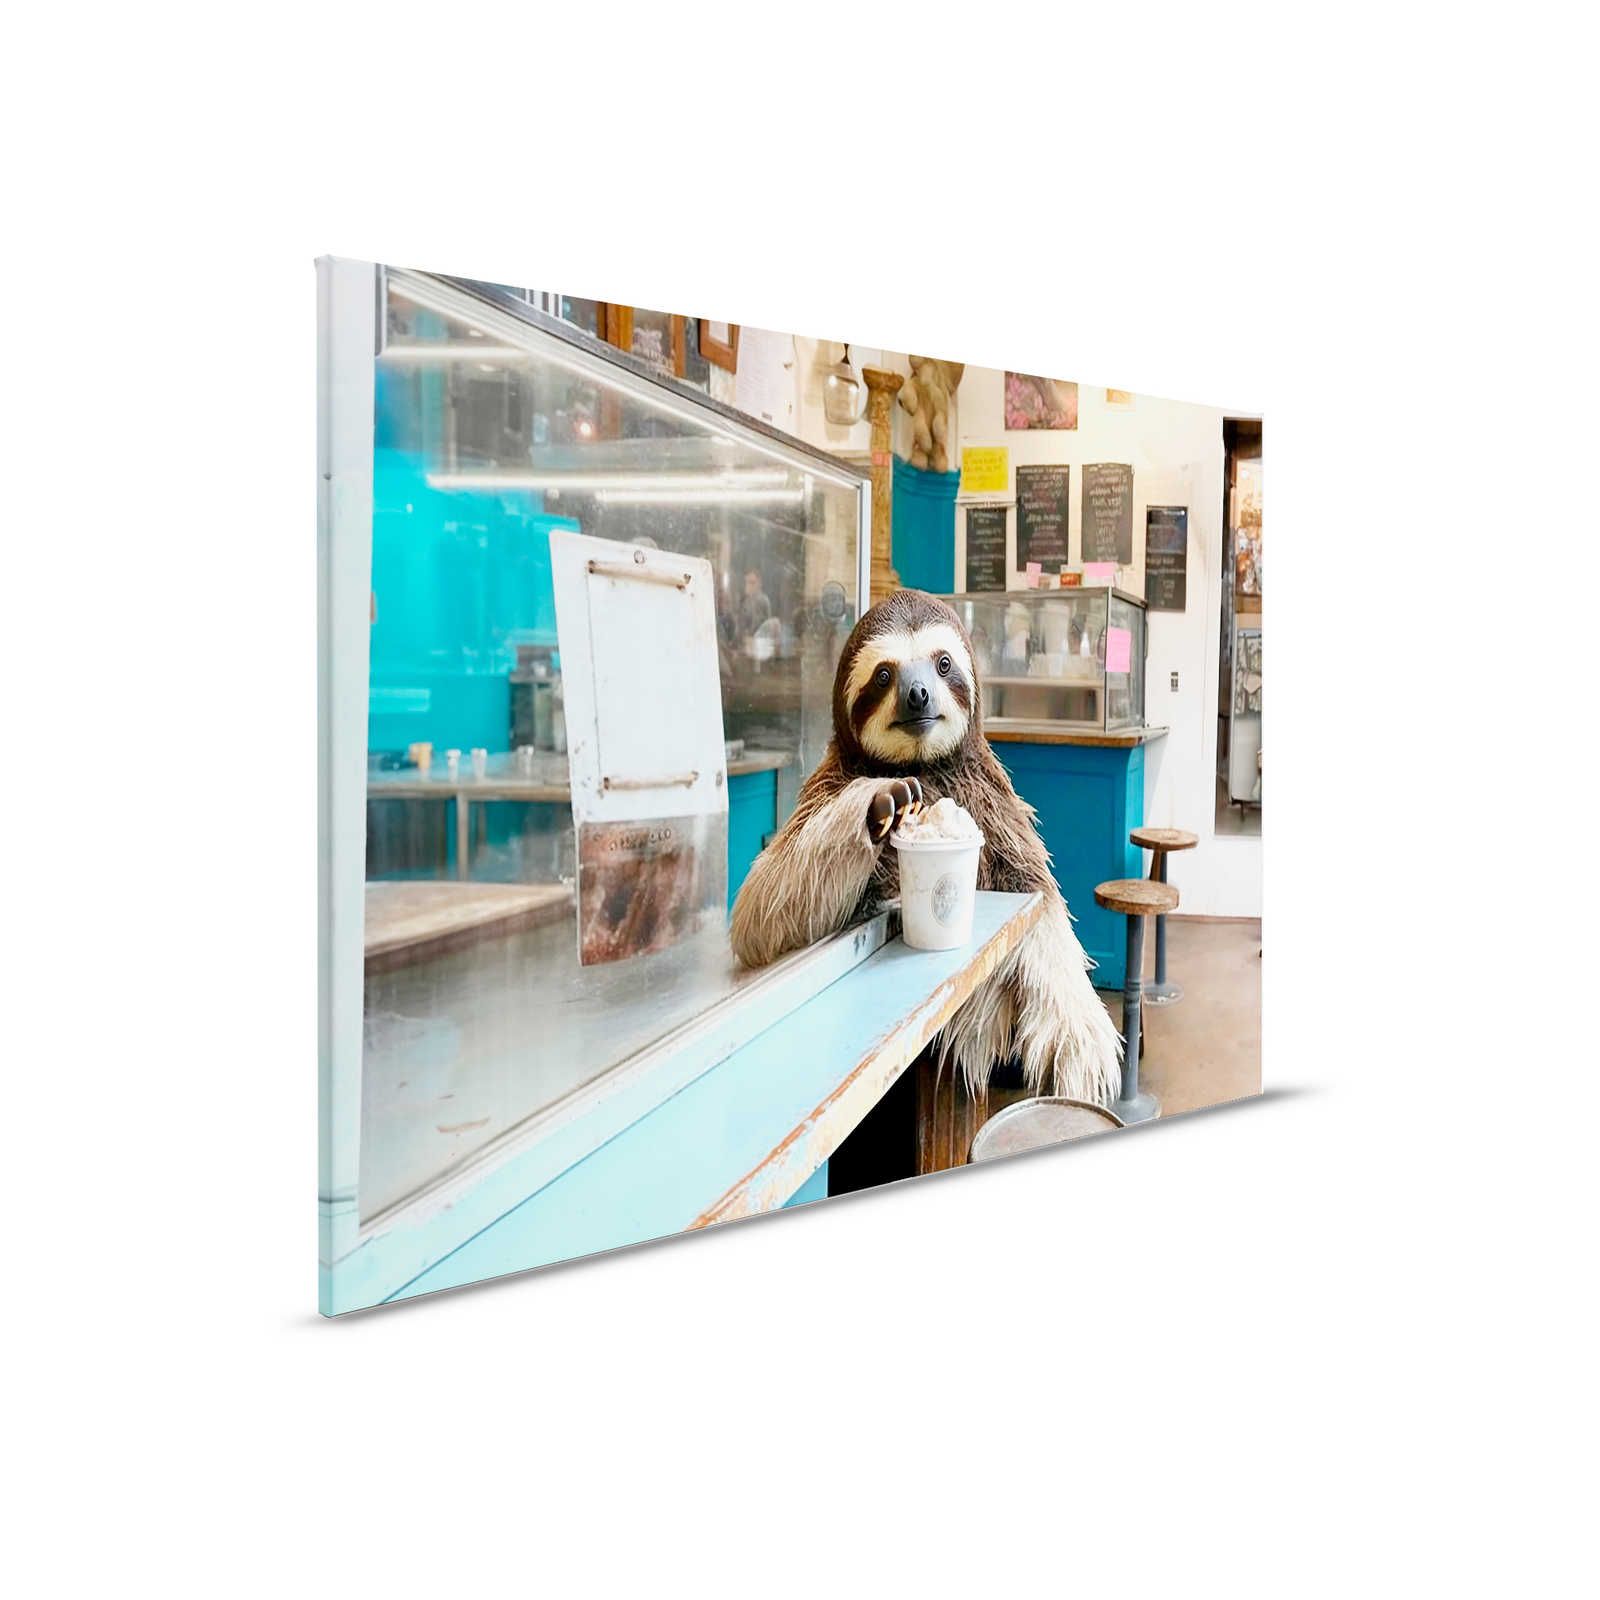             KI-Leinwandbild »icy sloth« – 90 cm x 60 cm
        